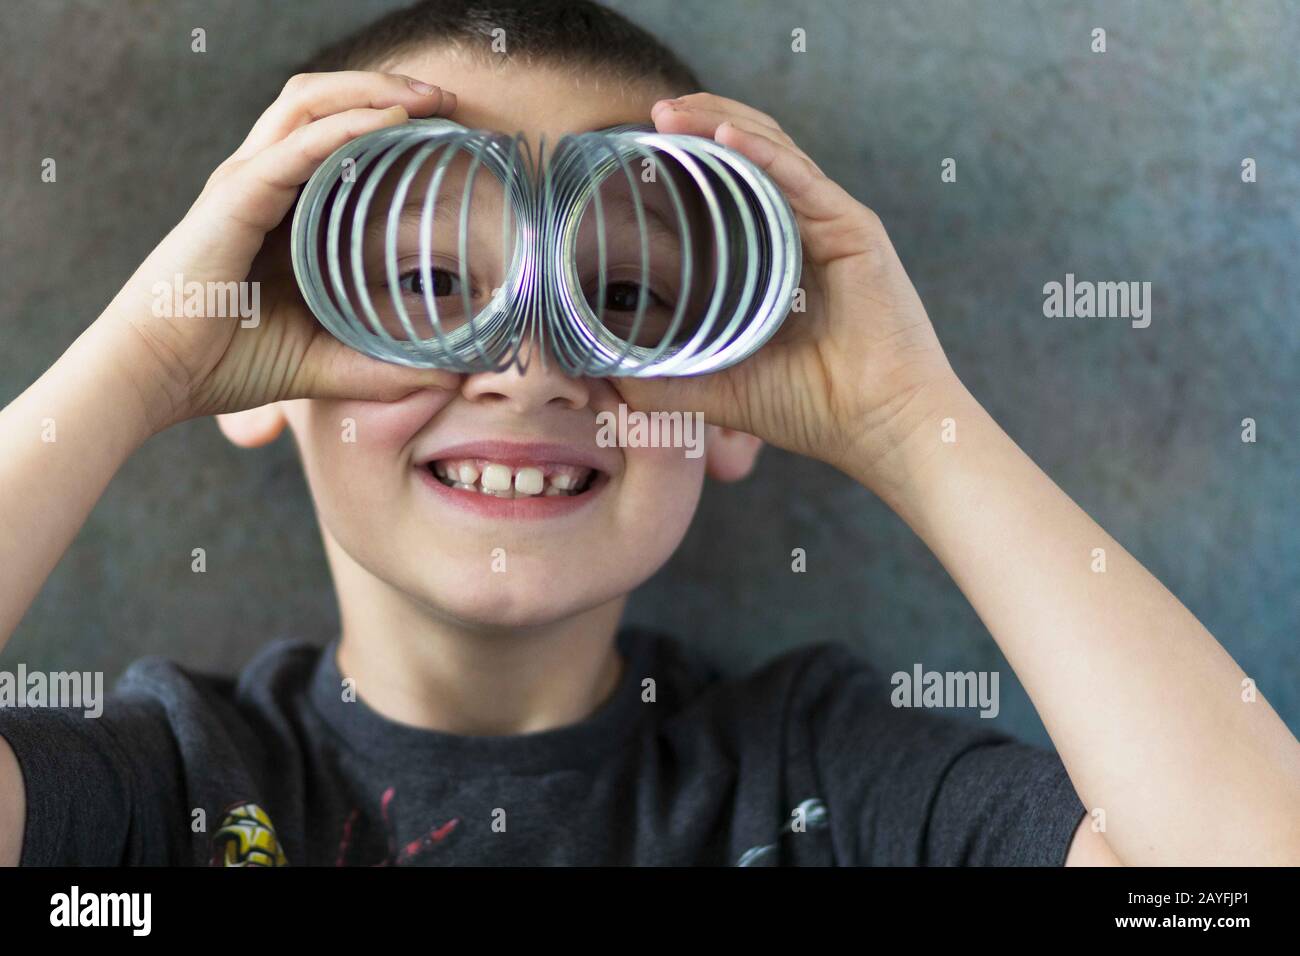 A boy looks through a slinky toy. Stock Photo